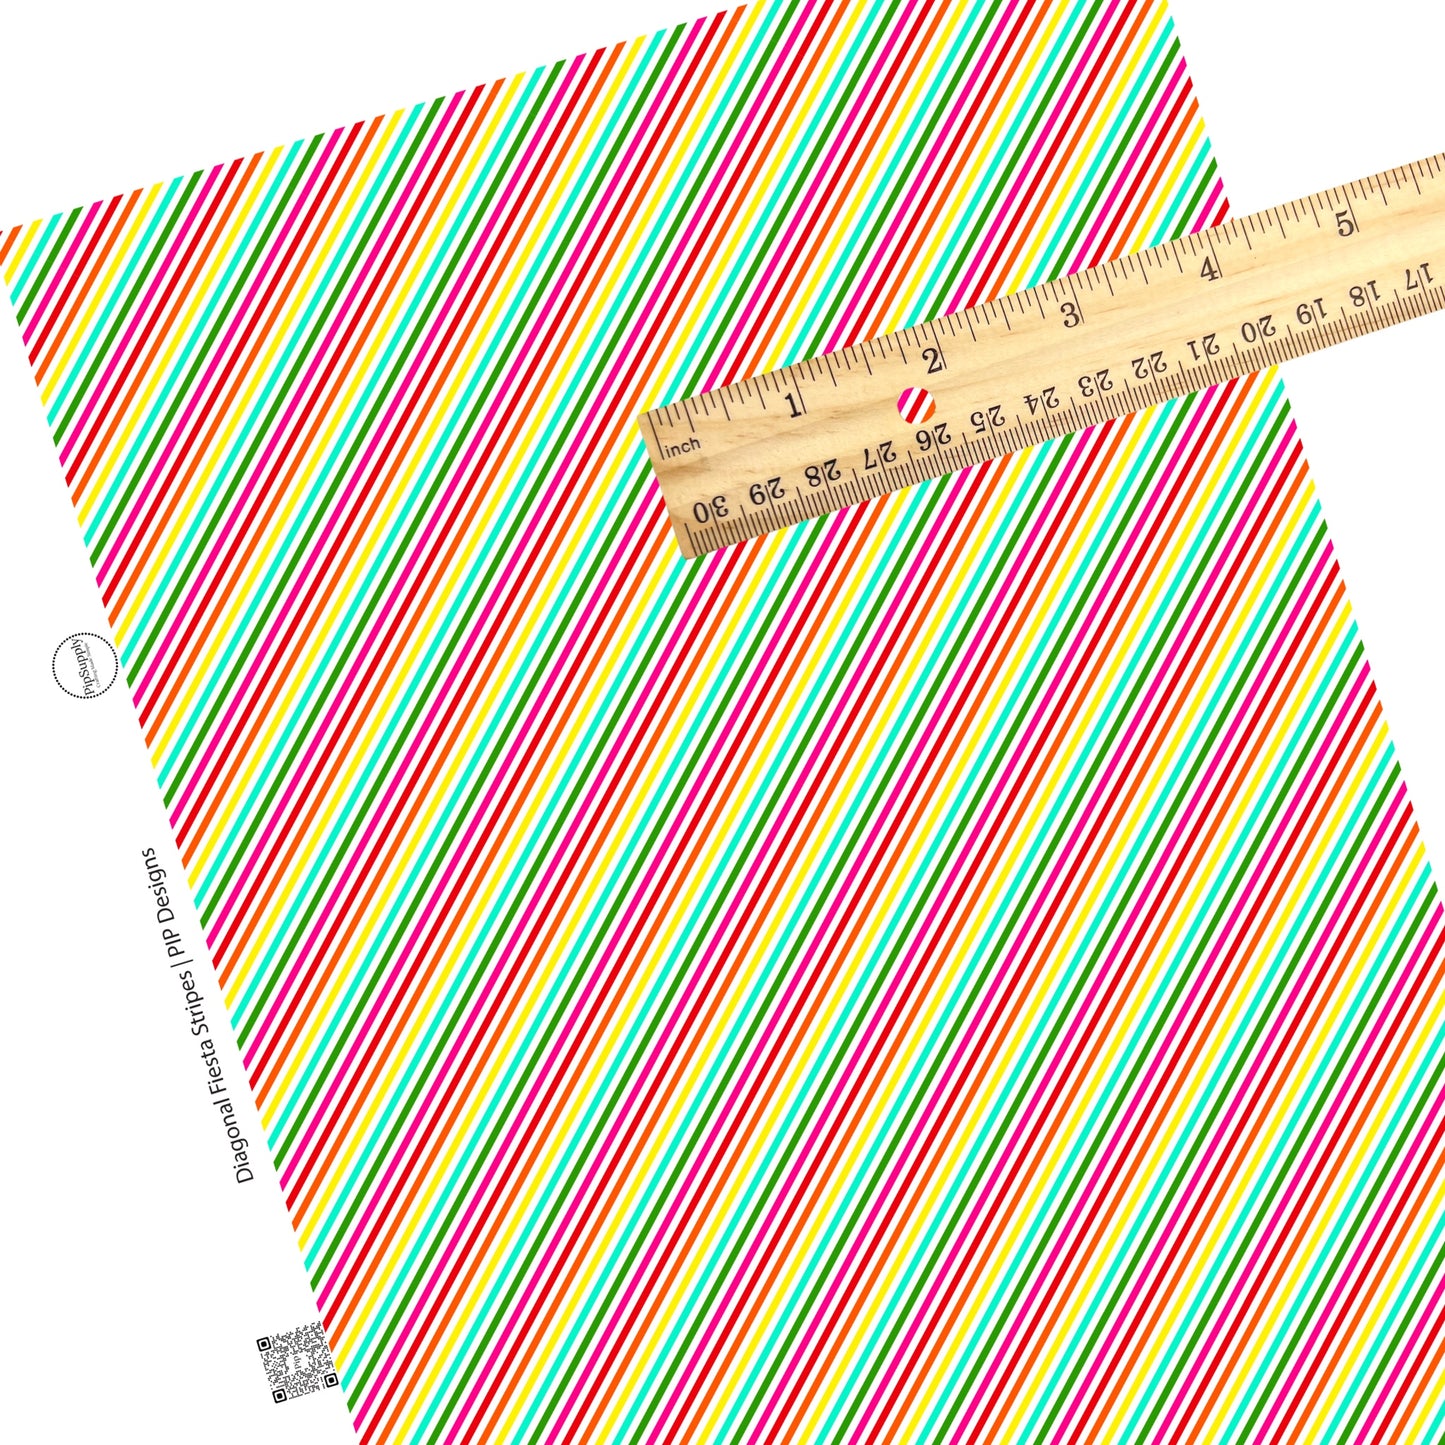 Bright diagonal fiesta stripe faux leather sheets